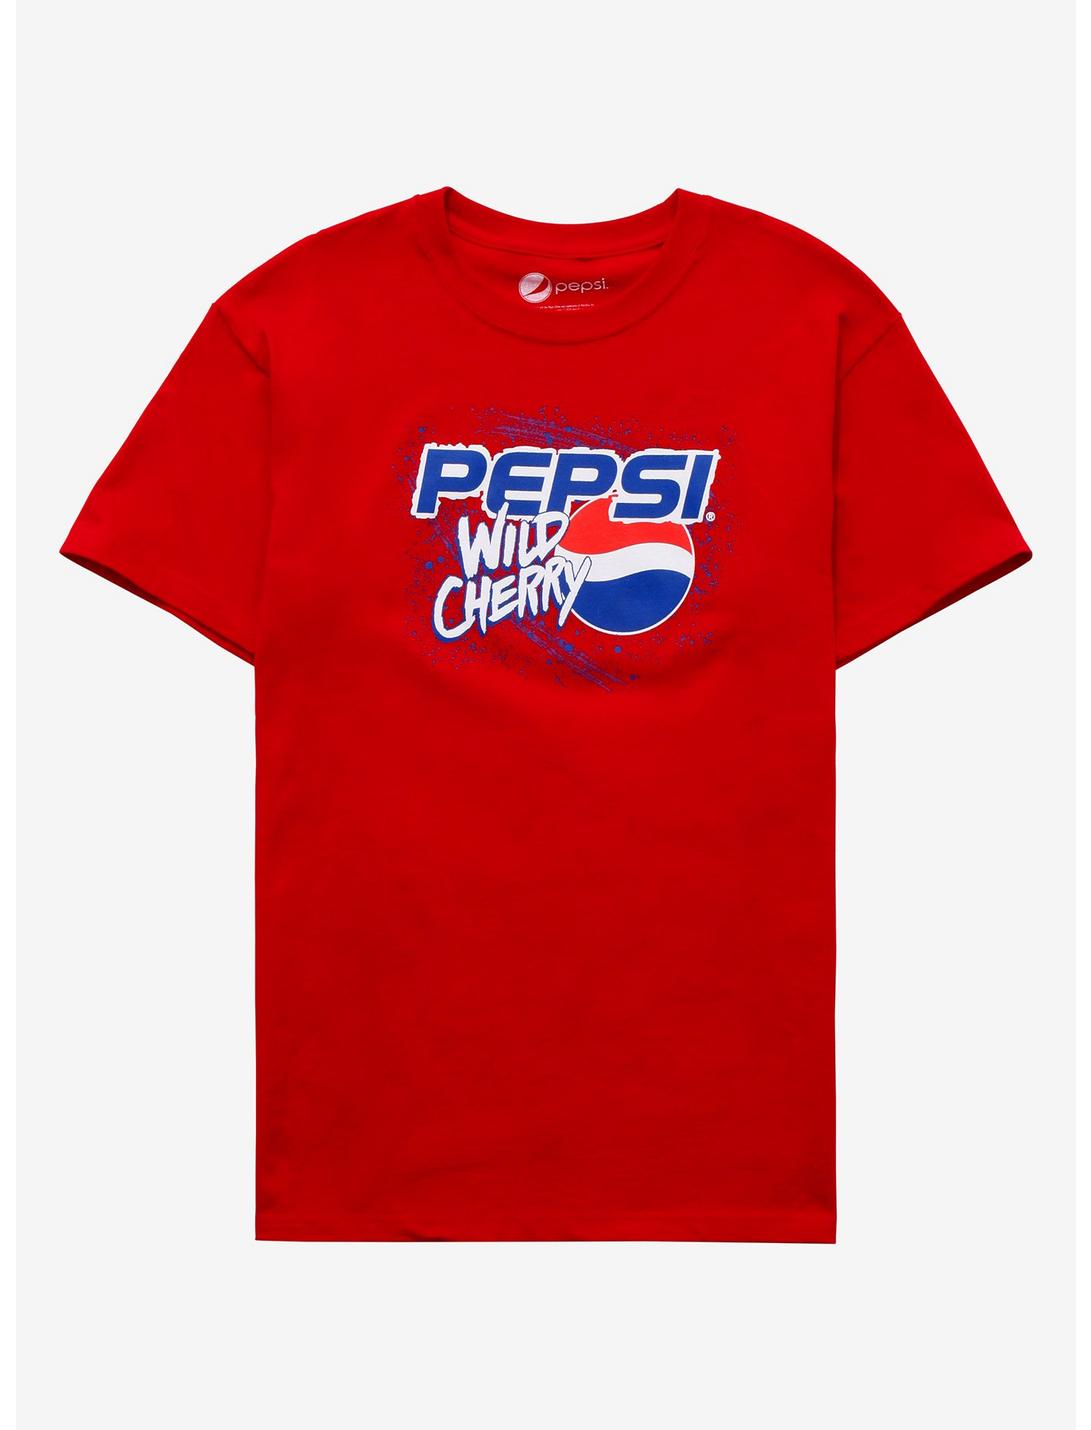 Pepsi Wild Cherry Boyfriend Fit Girls T-Shirt, MULTI, hi-res